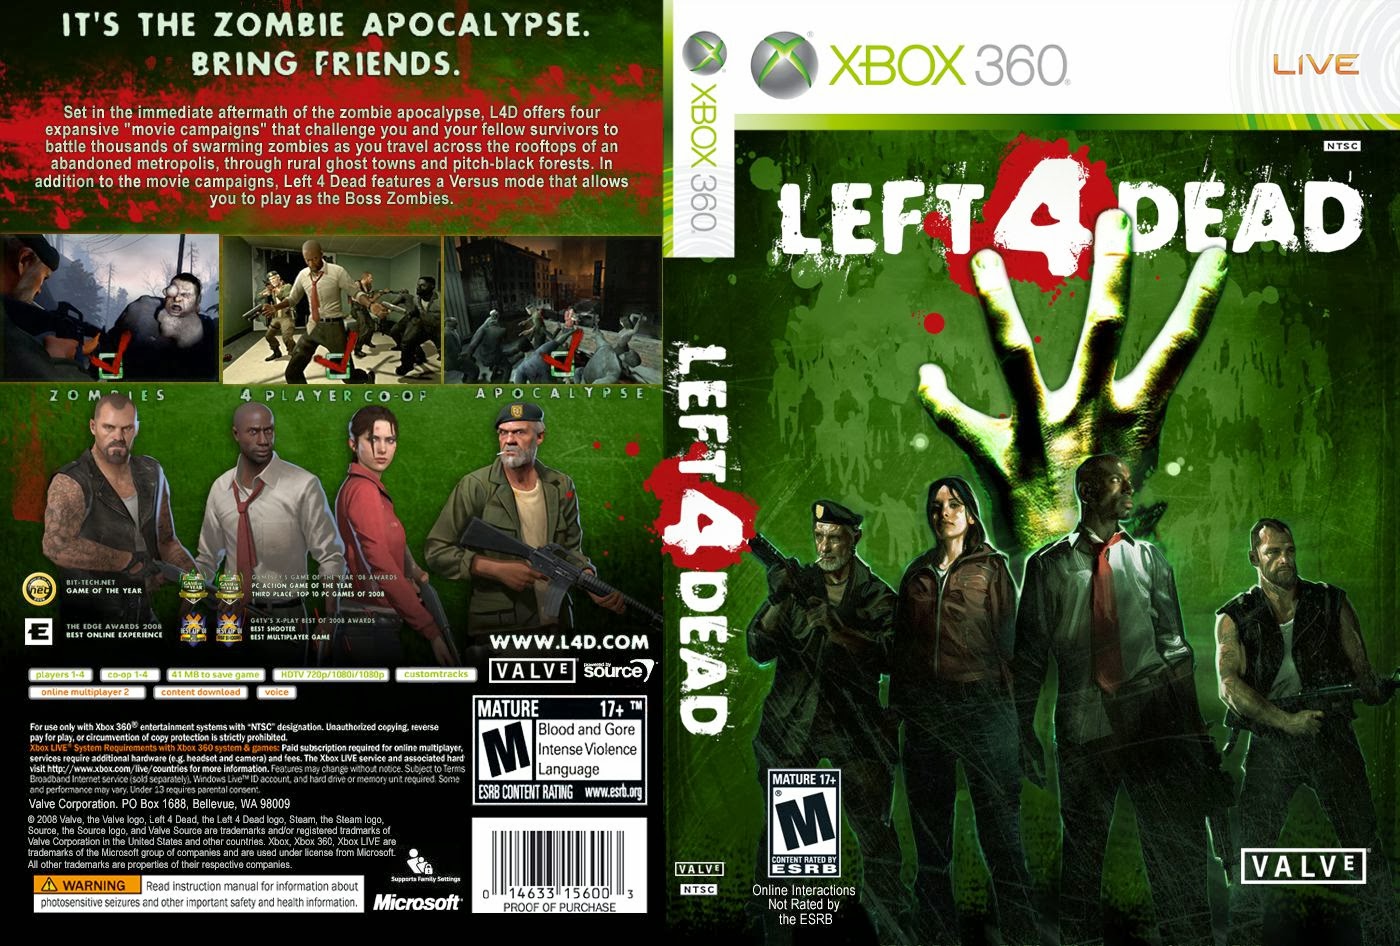 Jogo Left 4 Dead - Xbox 360 - MeuGameUsado